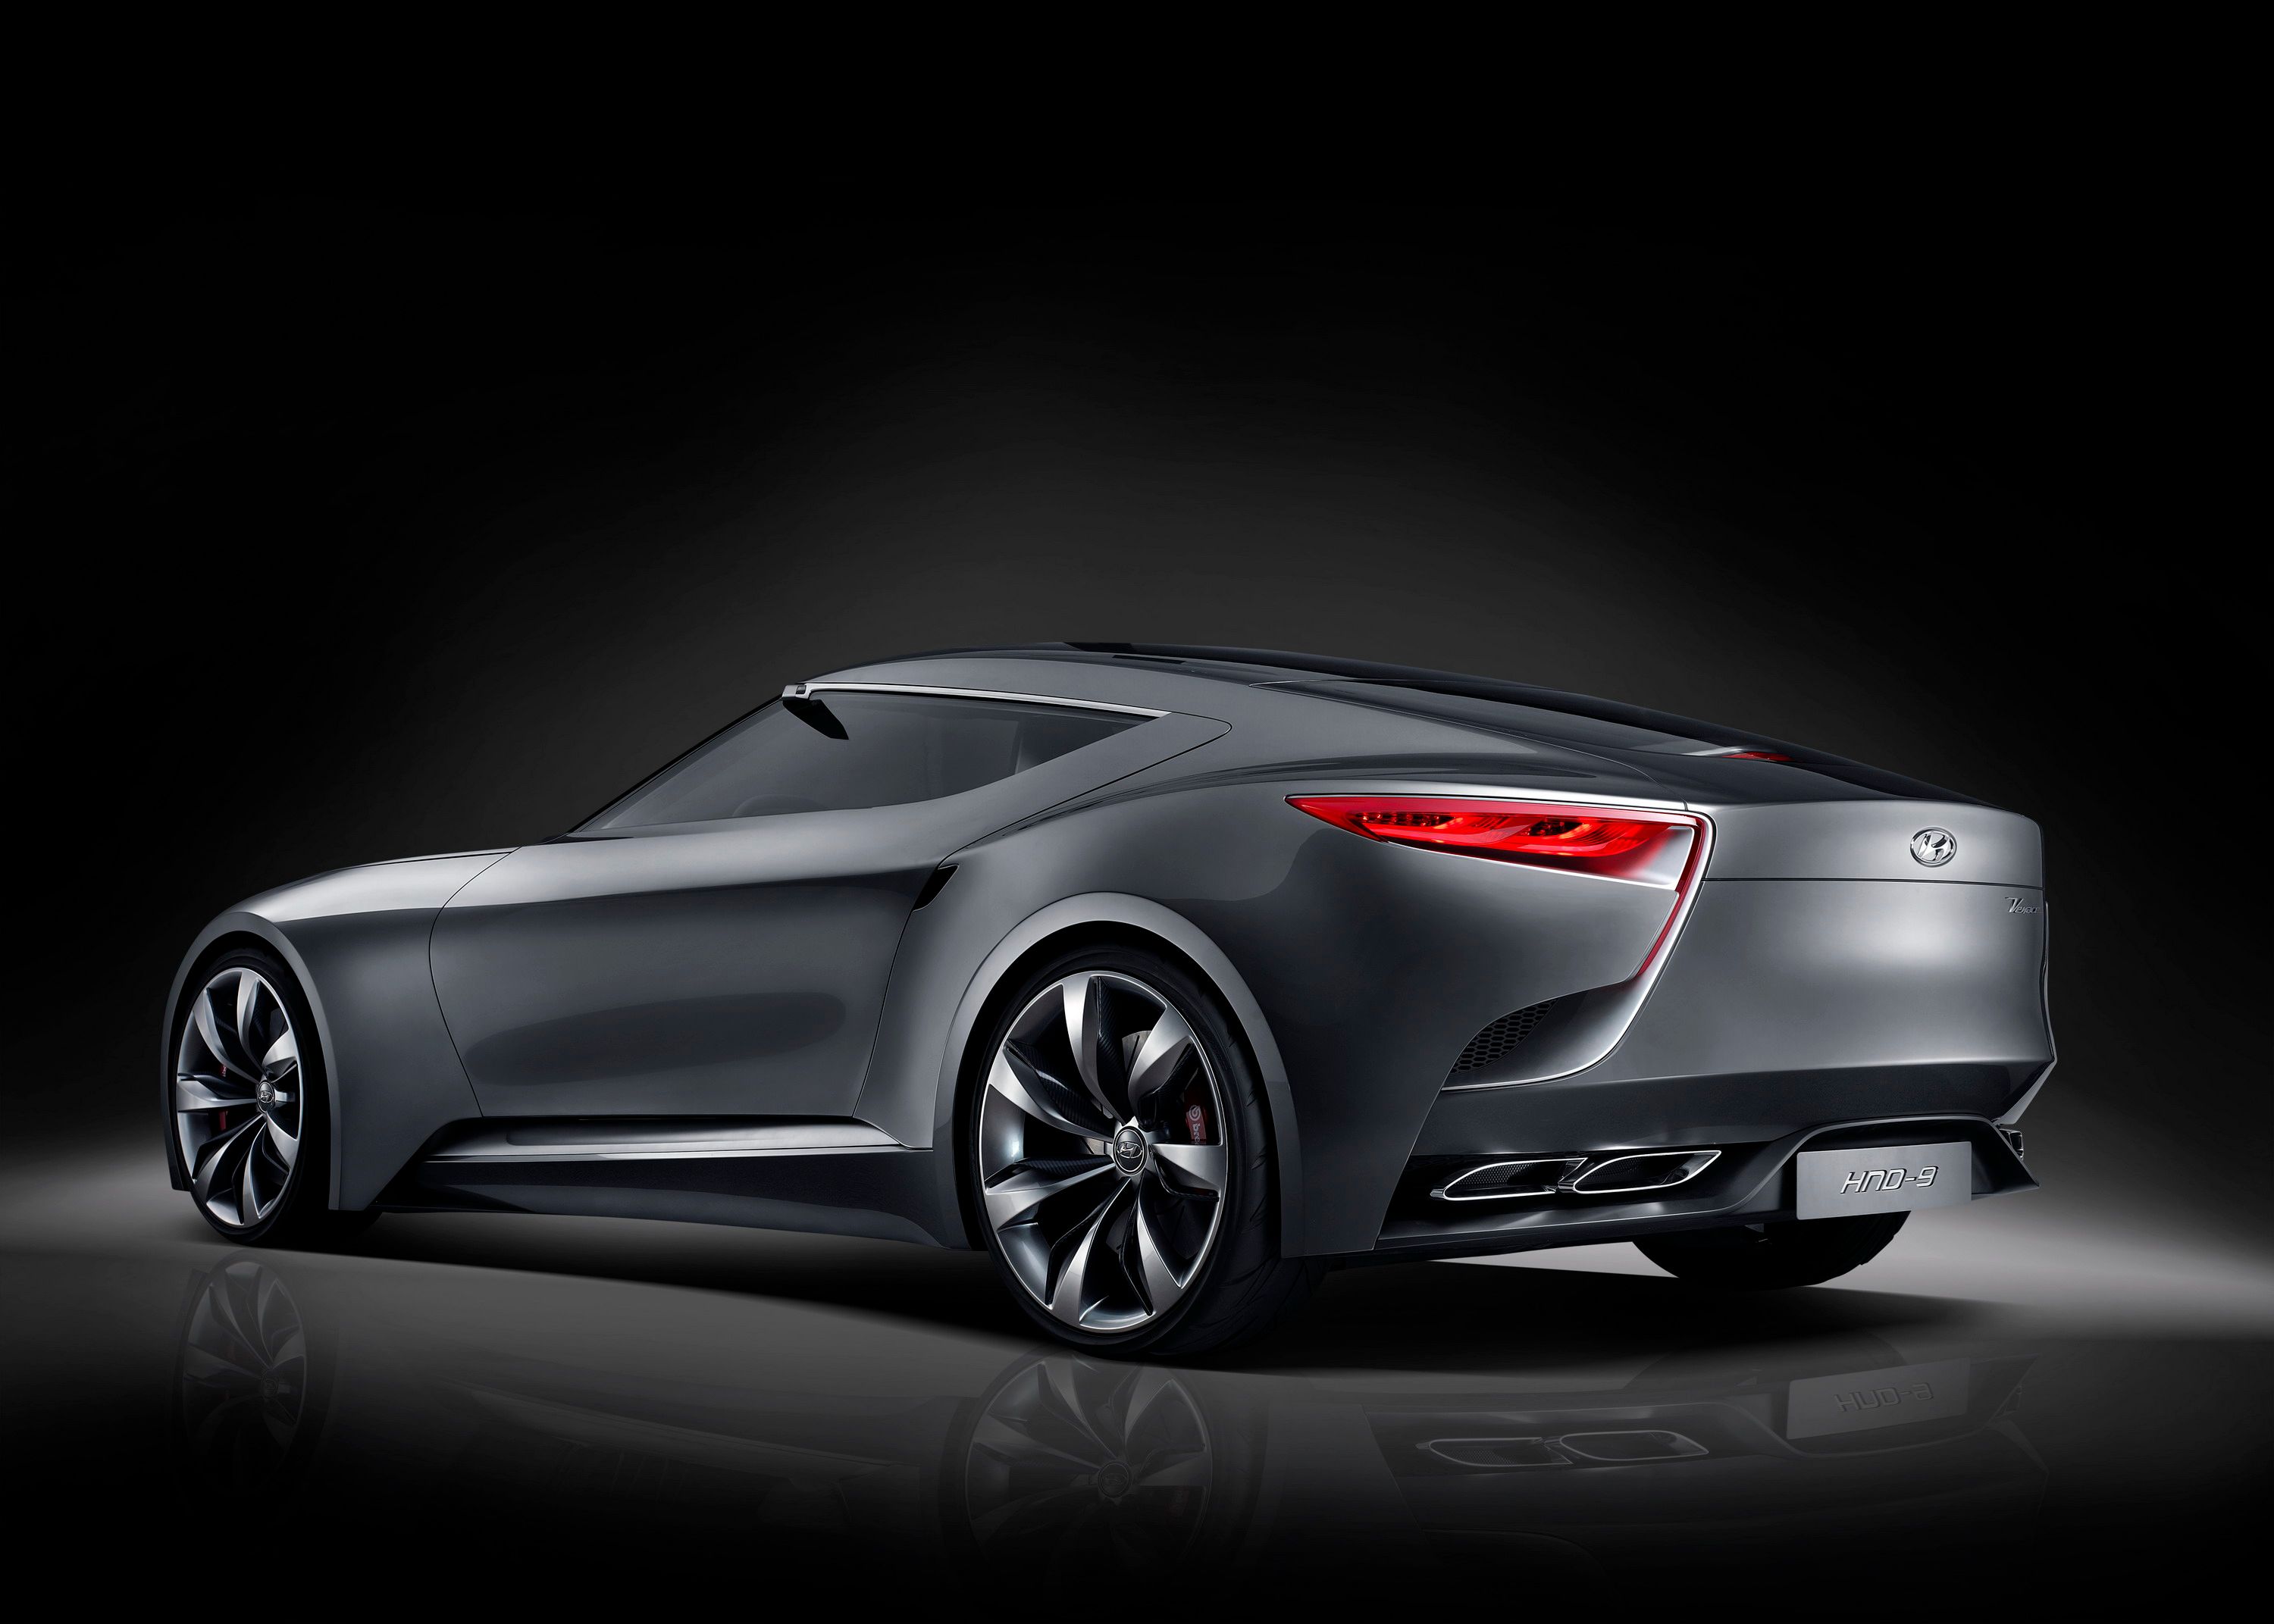 2013 Hyundai HND-9 Concept